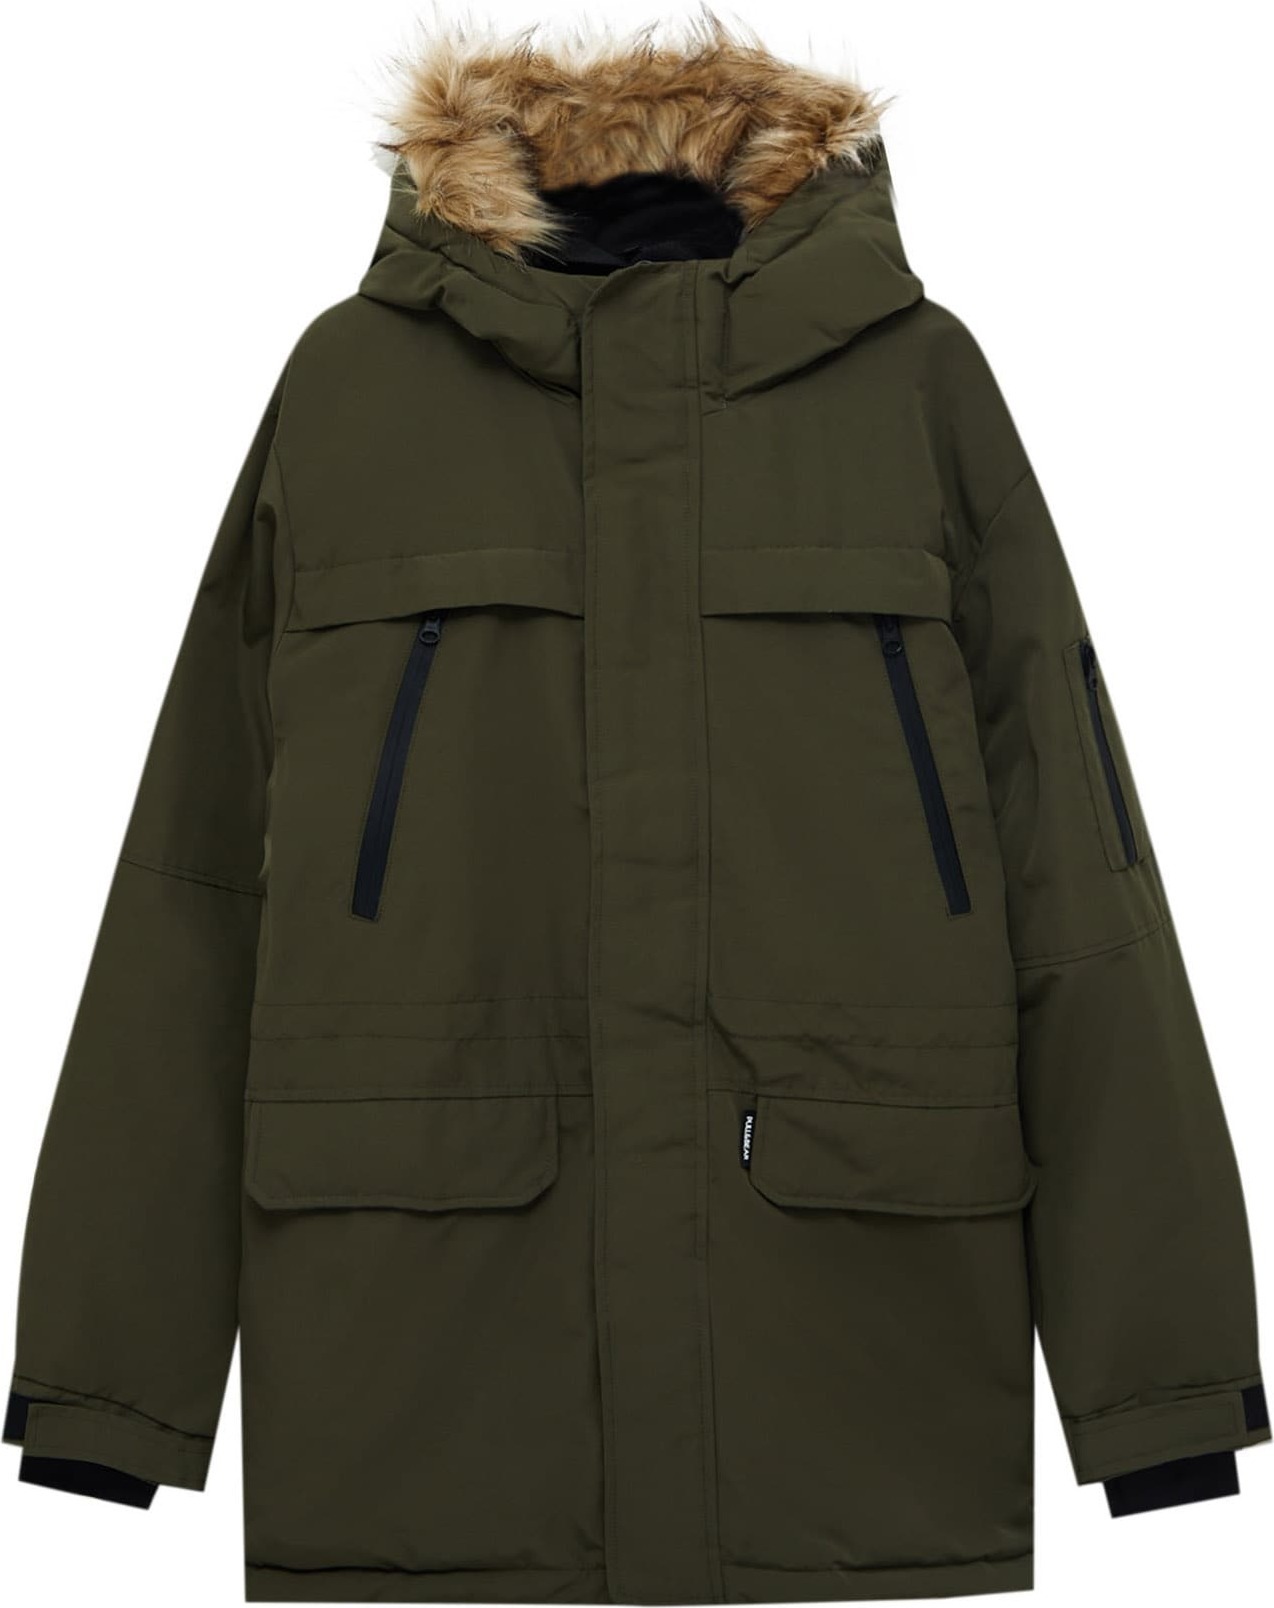 Pull&Bear Zimní kabát světle hnědá / khaki